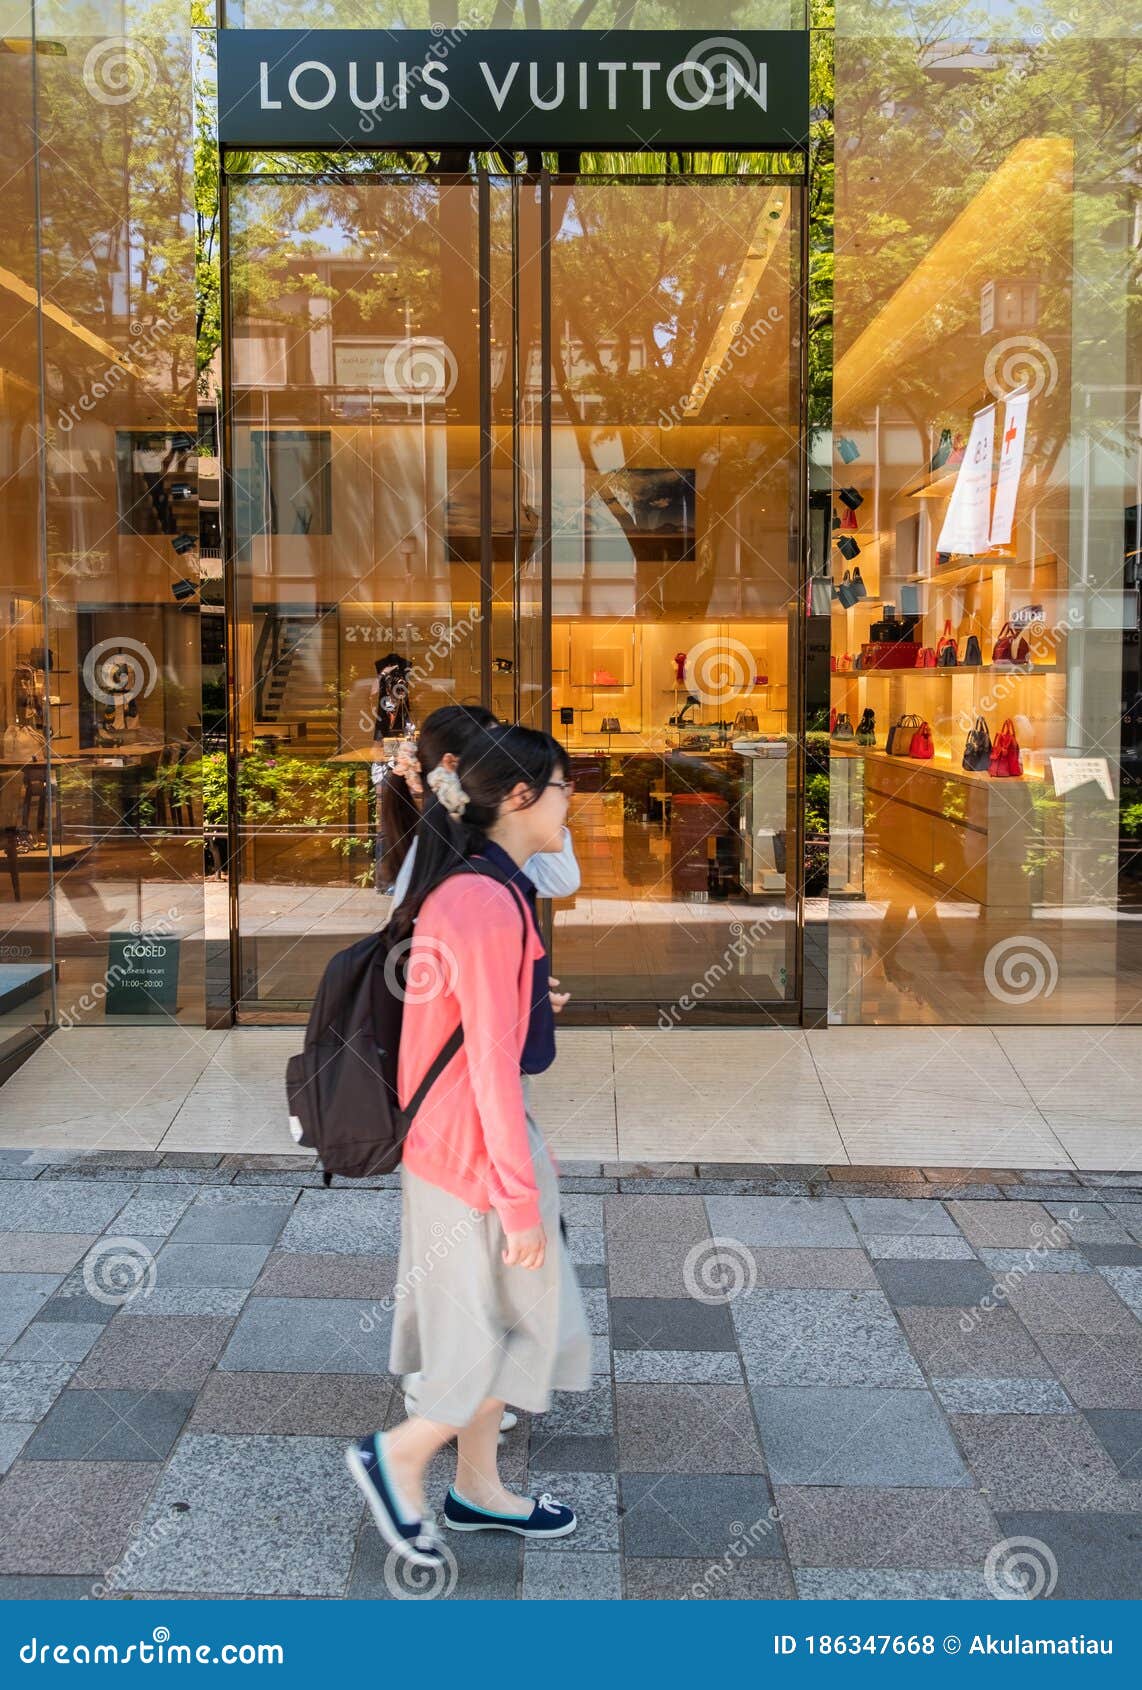 Louis Vuitton Store Front, Tokyo, Japan Editorial Stock Photo